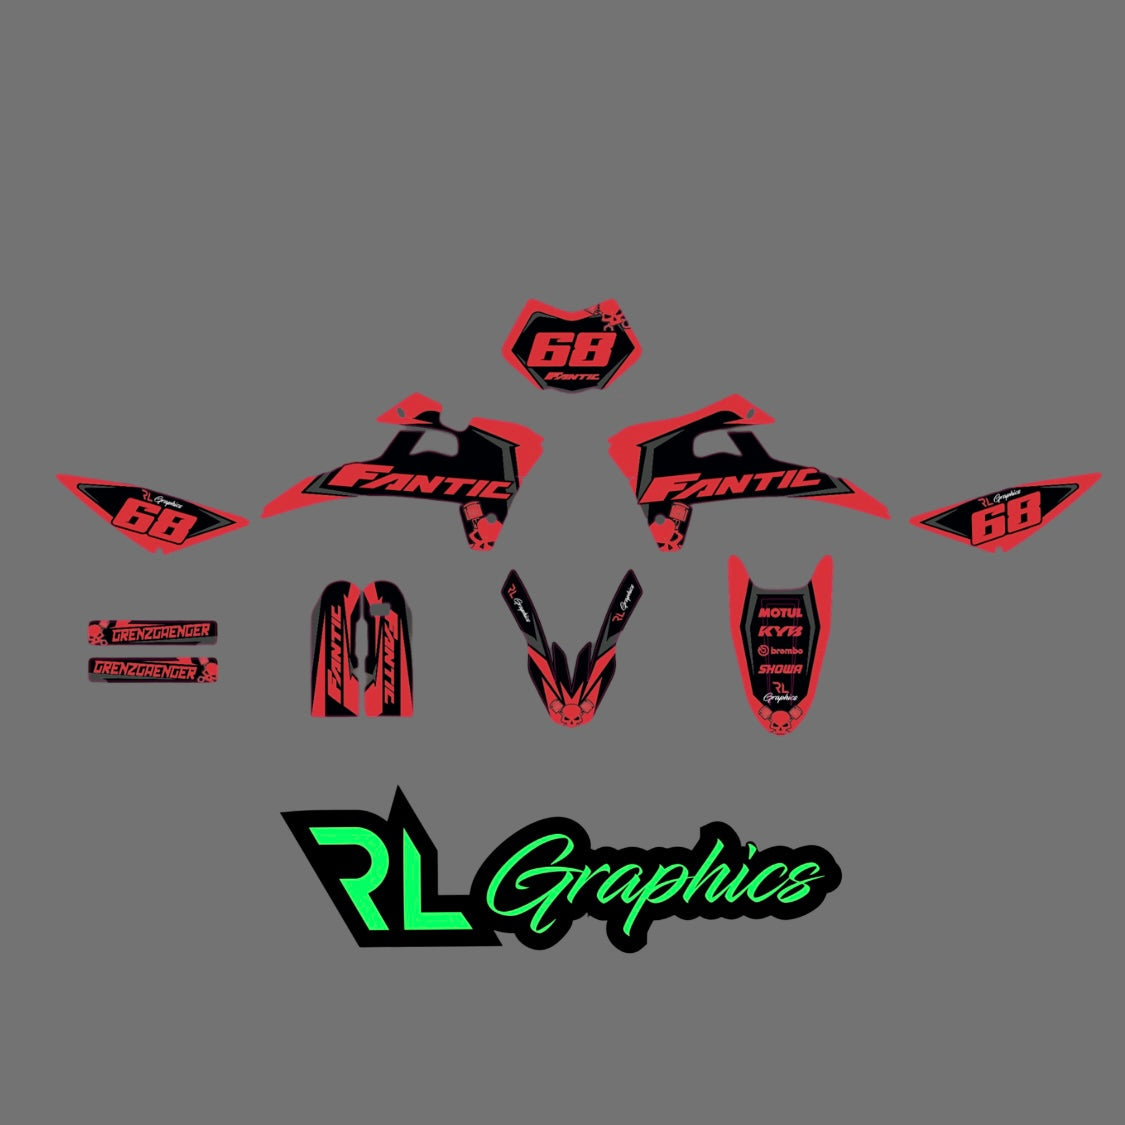 Grafica Fantic “spider” - RL_RacingStore